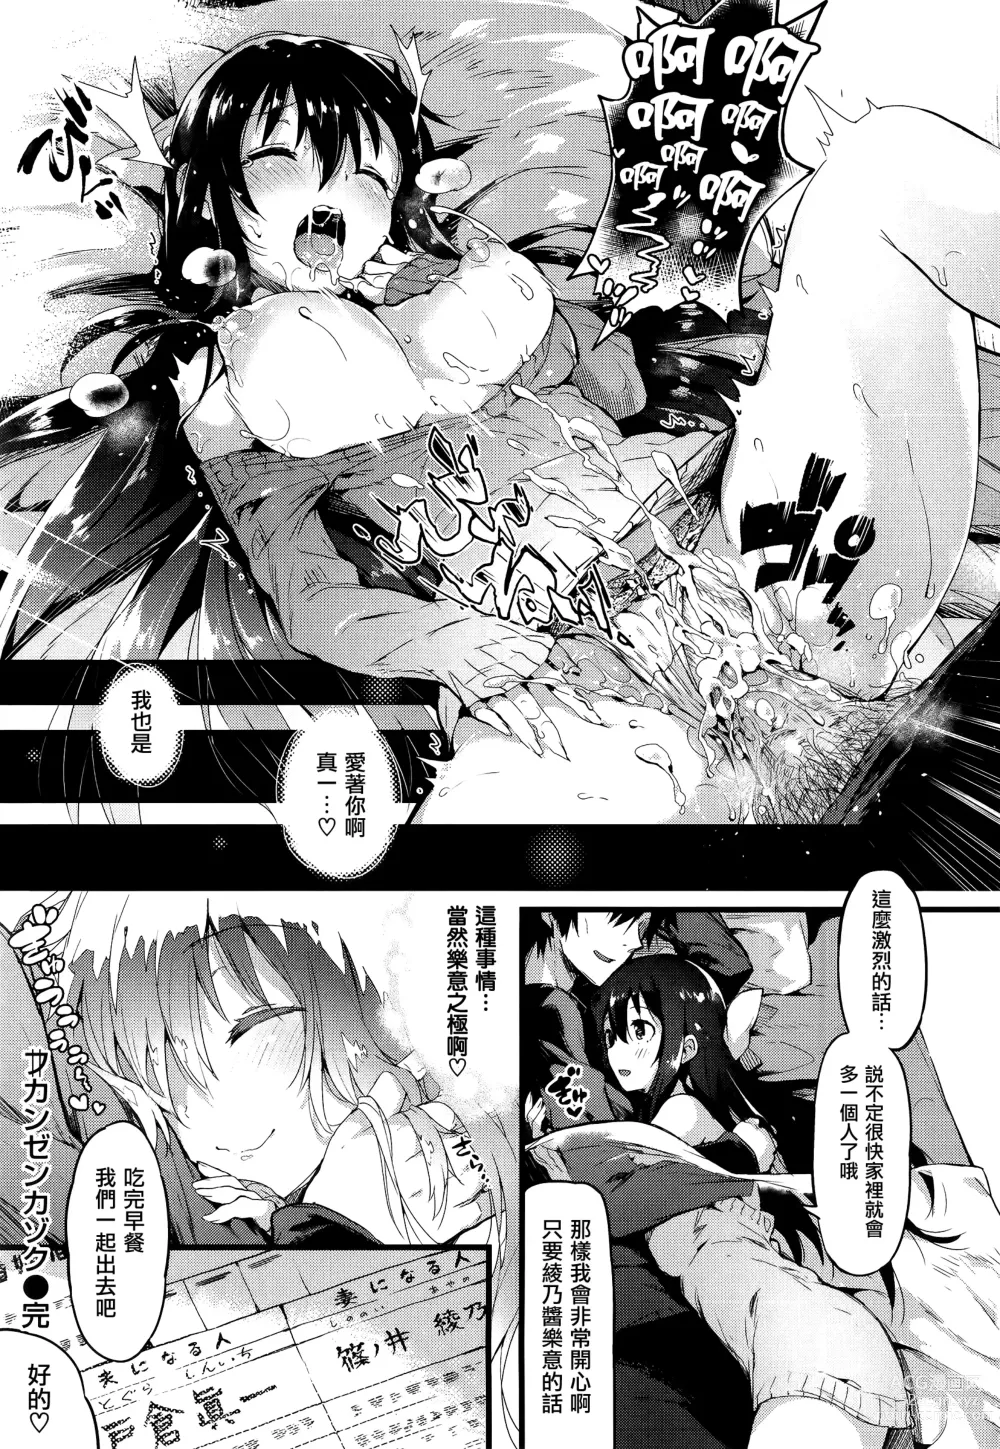 Page 217 of manga ぷにかの + 8P小冊子